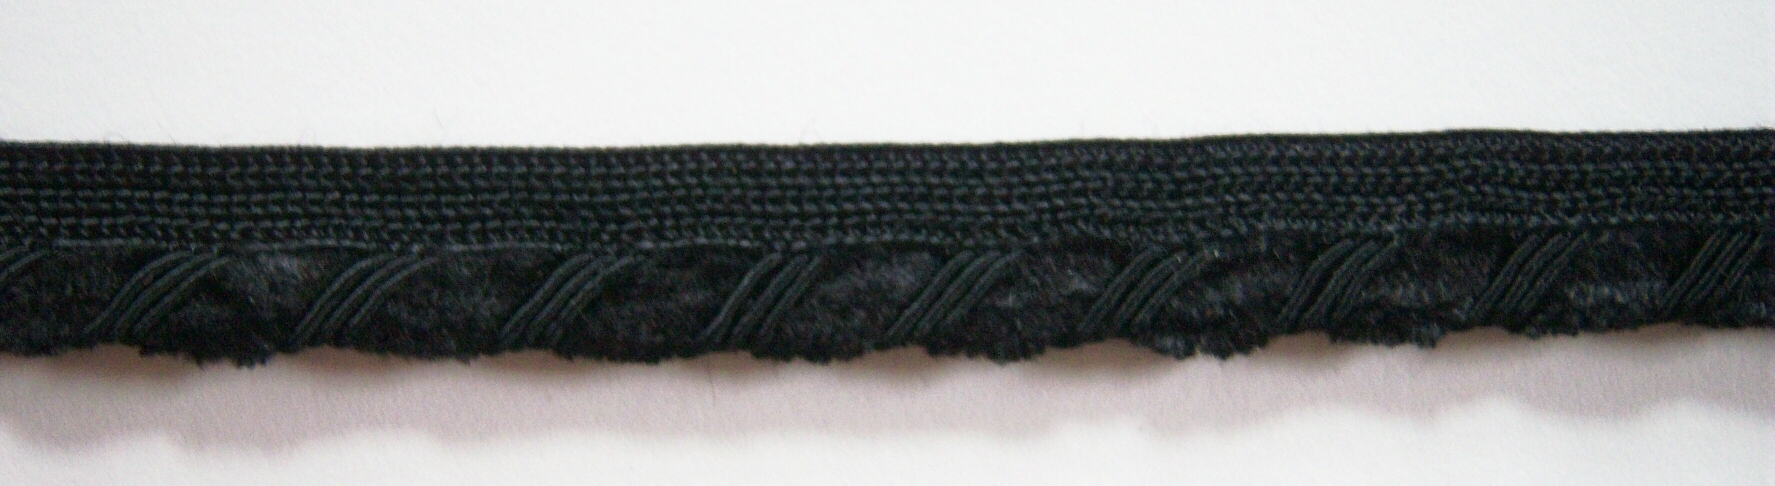 Black Chenille/Cords 3/16" Piping